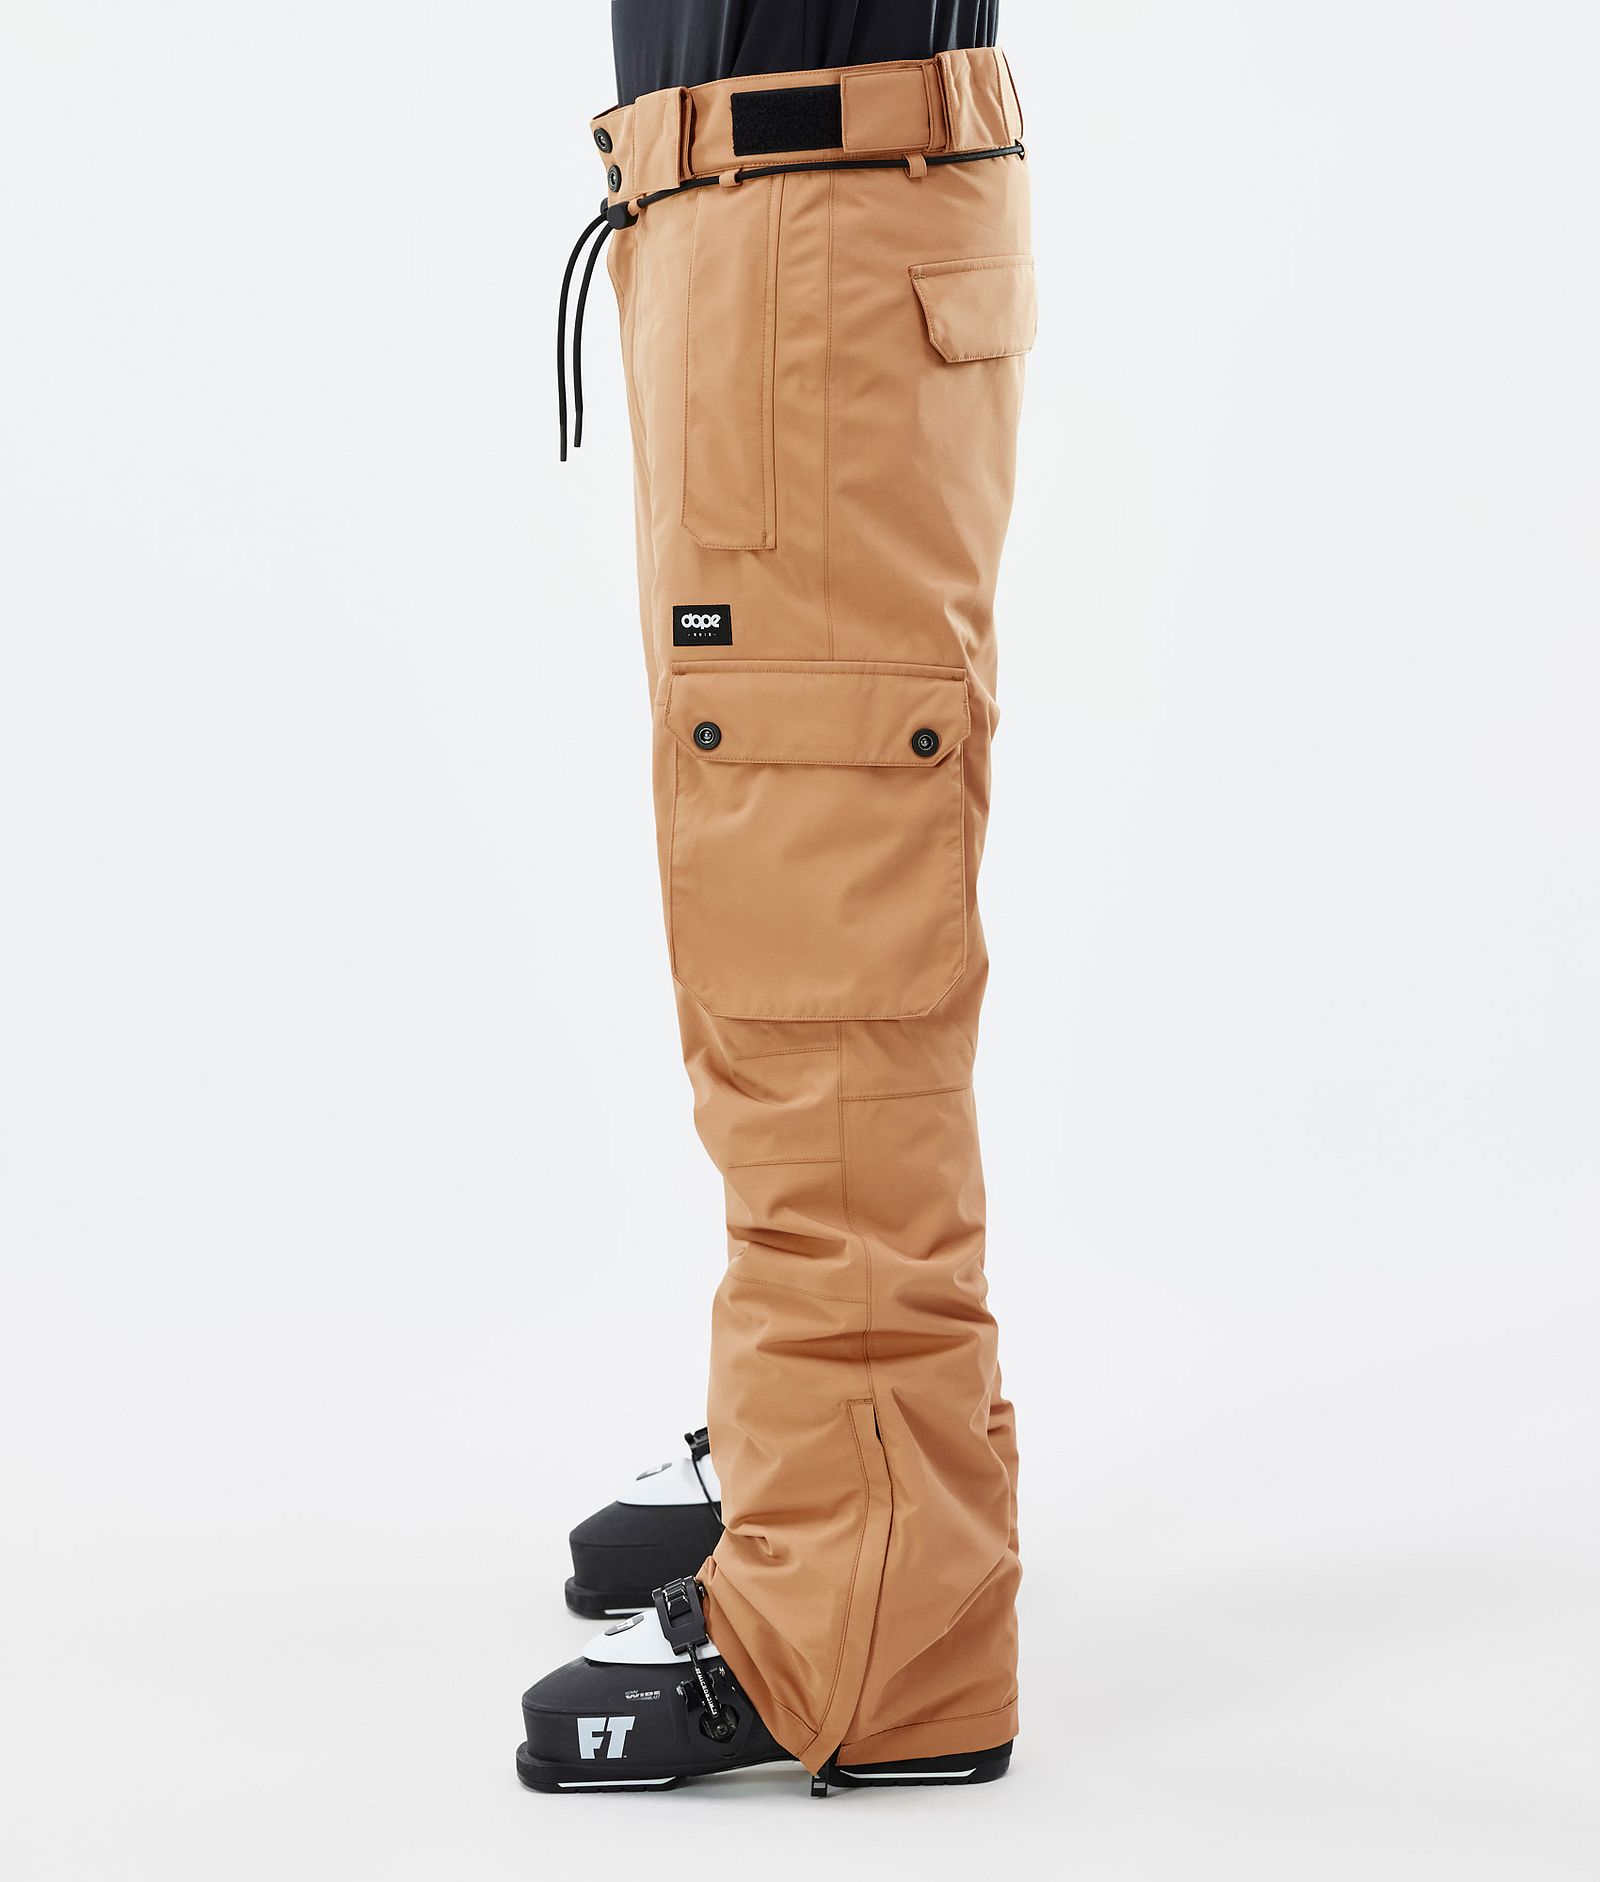 Iconic Pantalon de Ski Homme Khaki Yellow